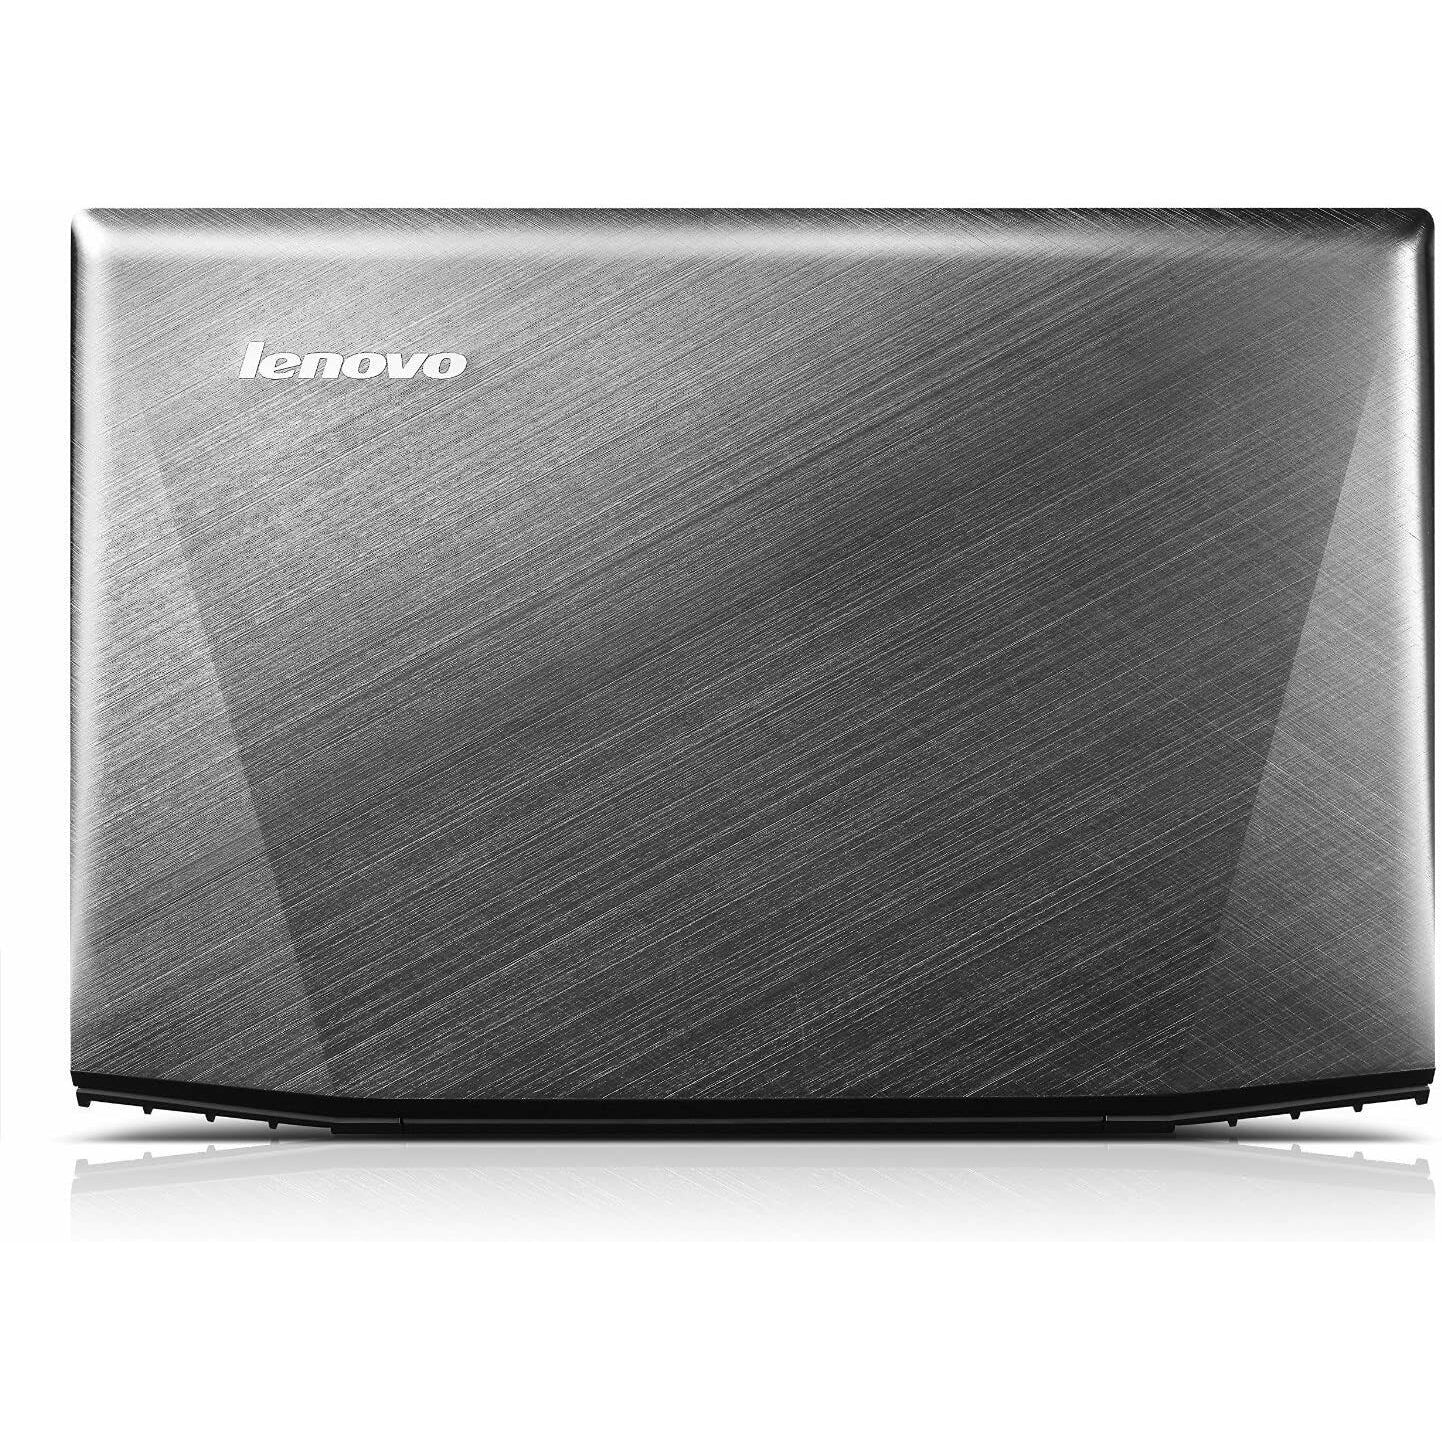 Lenovo Y70-70 Touch, Intel Core i7-4710HQ, 16GB RAM, 256GB SSD